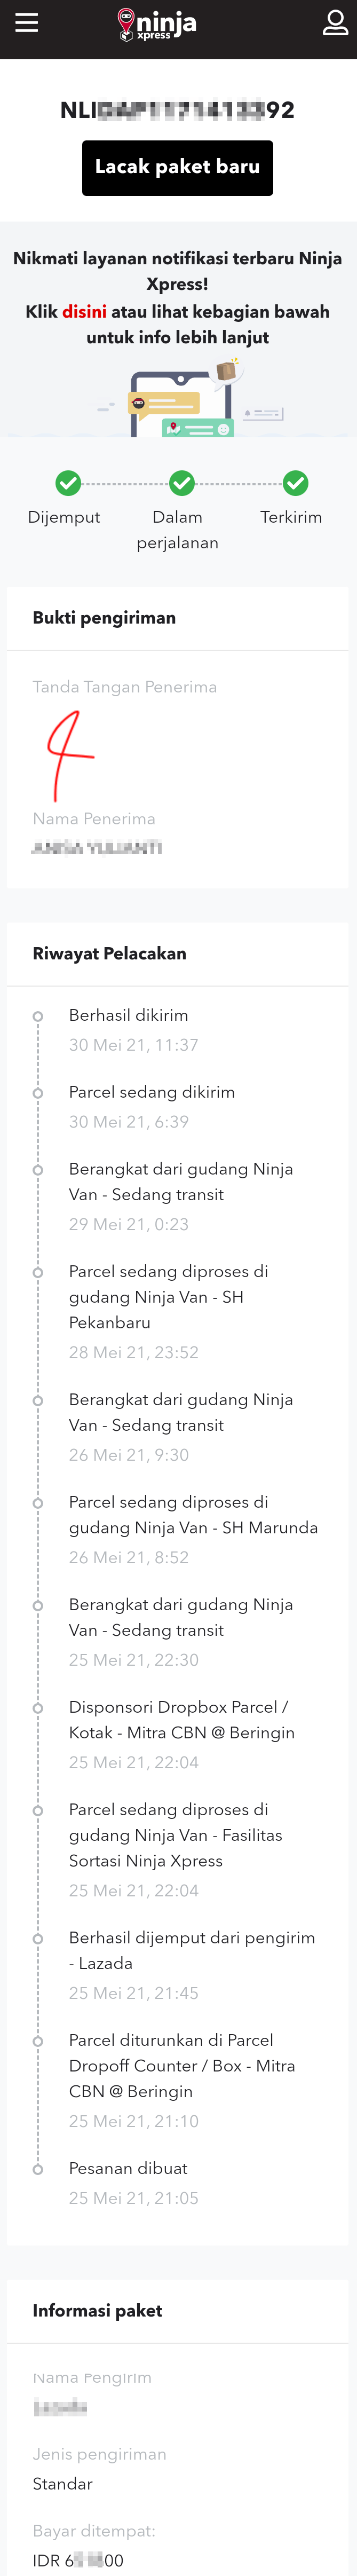 Contoh cek resi pengiriman paket ninja express